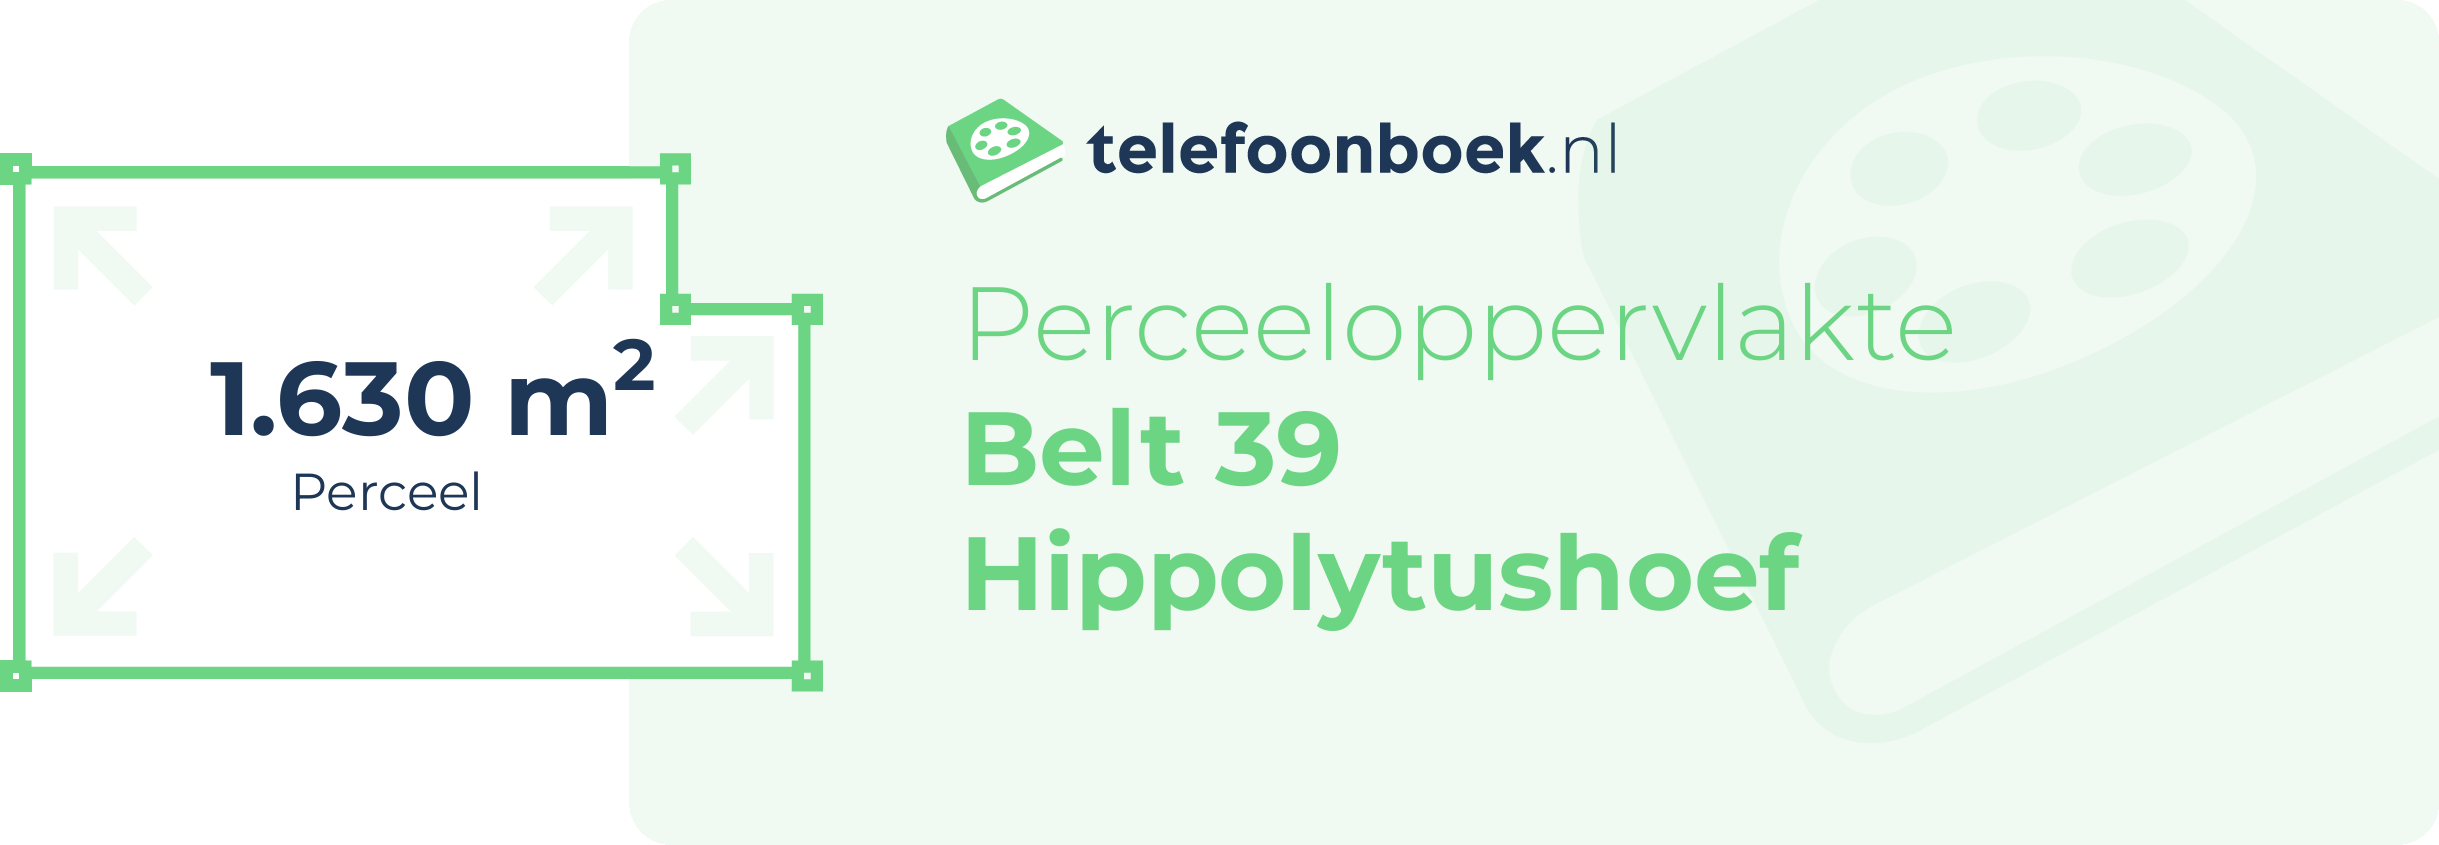 Perceeloppervlakte Belt 39 Hippolytushoef